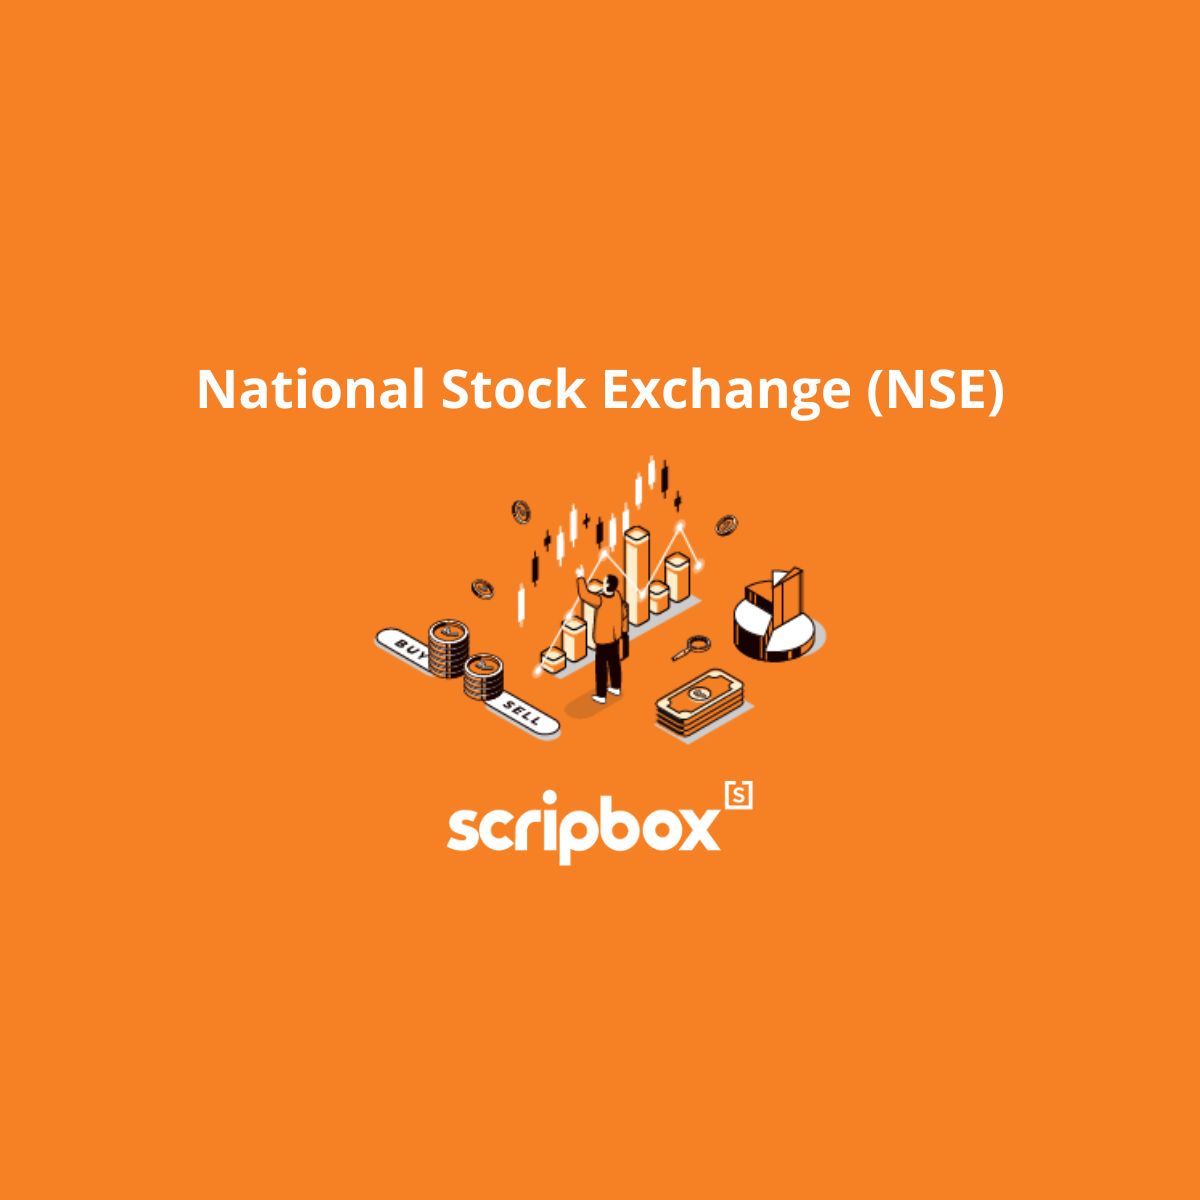 national stock exchange (nse)